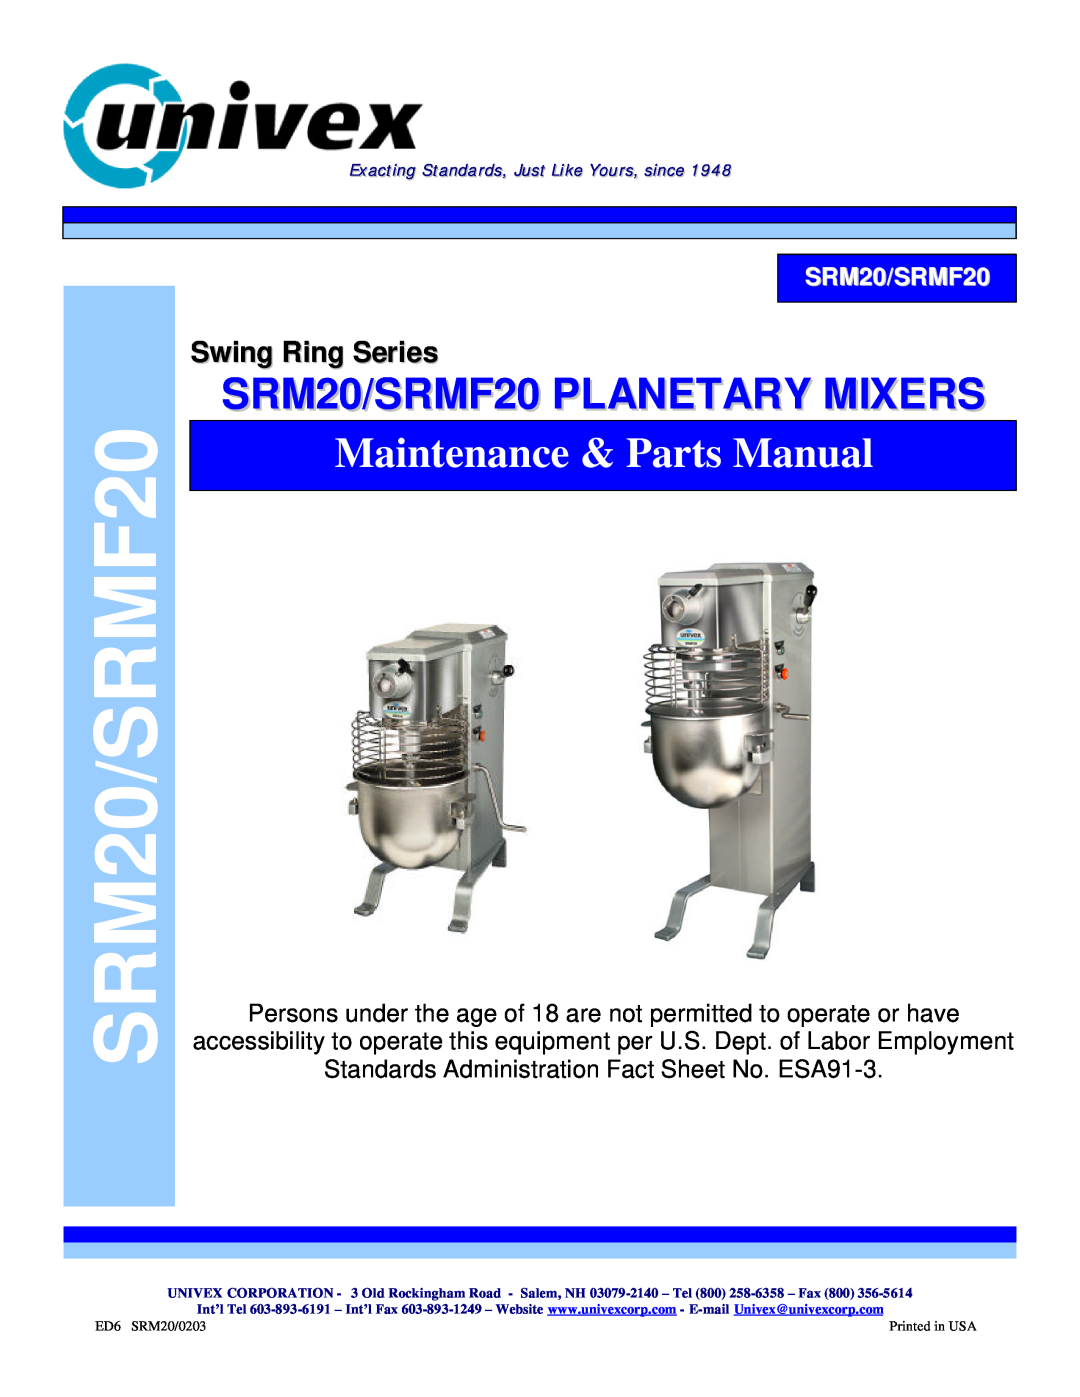 Univex manual SRM20/SRMF20 PLANETARY MIXERS, Maintenance & Parts Manual, Swing Ring Series 